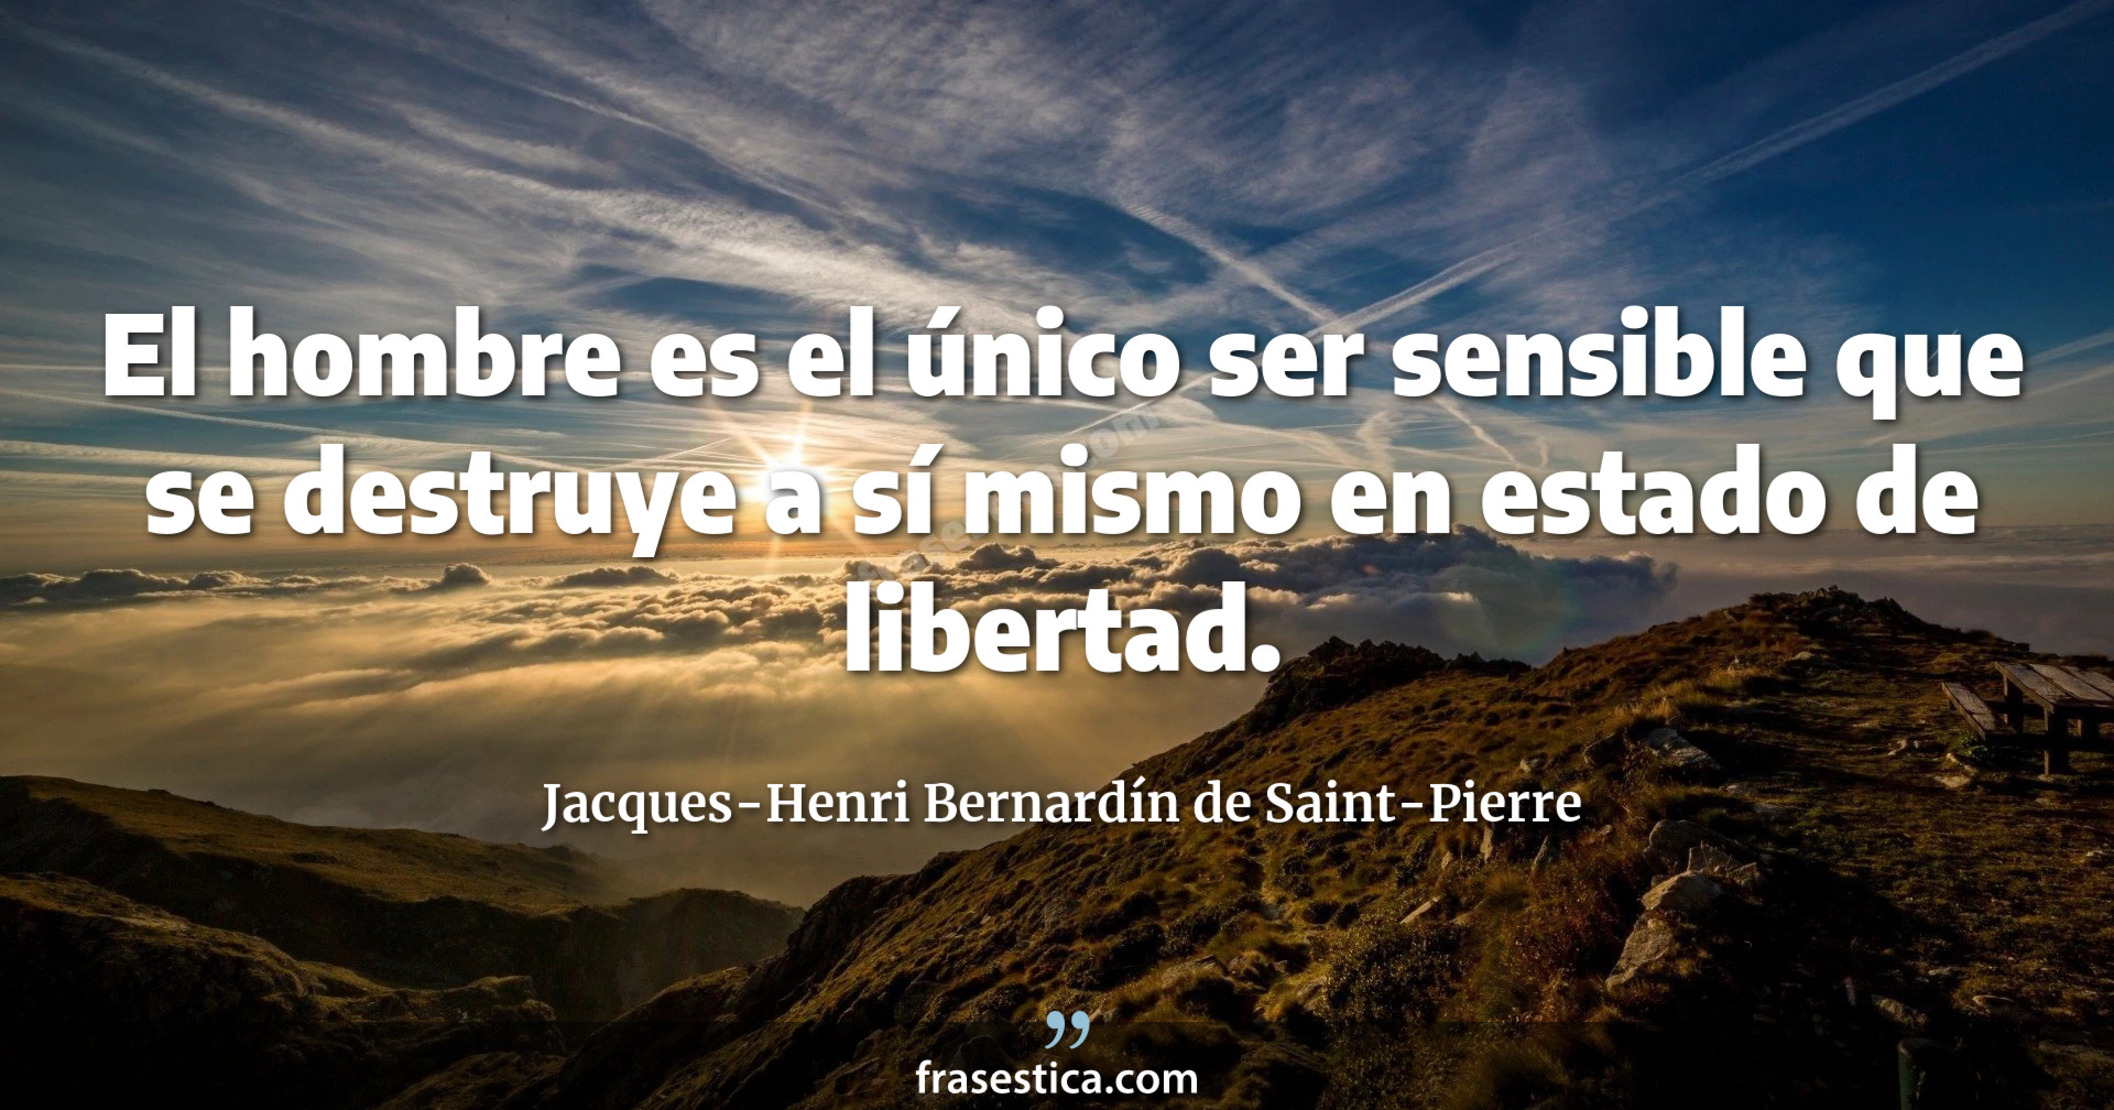 El hombre es el único ser sensible que se destruye a sí mismo en estado de libertad. - Jacques-Henri Bernardín de Saint-Pierre